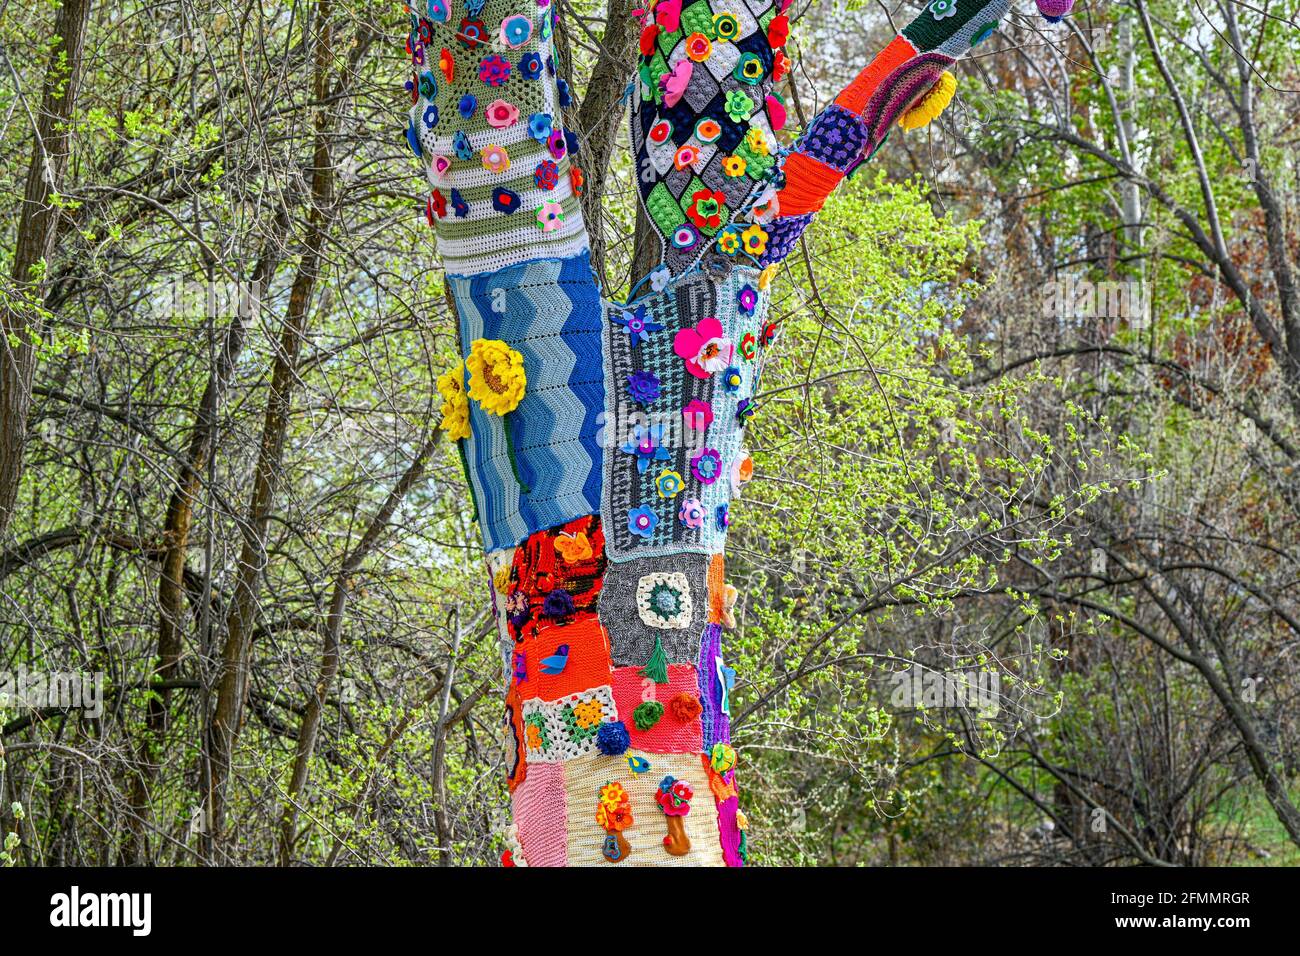 Crochet, knoitting, yarn bombed tree, Penticton Art Gallery, British Columbia, Canada Stock Photo